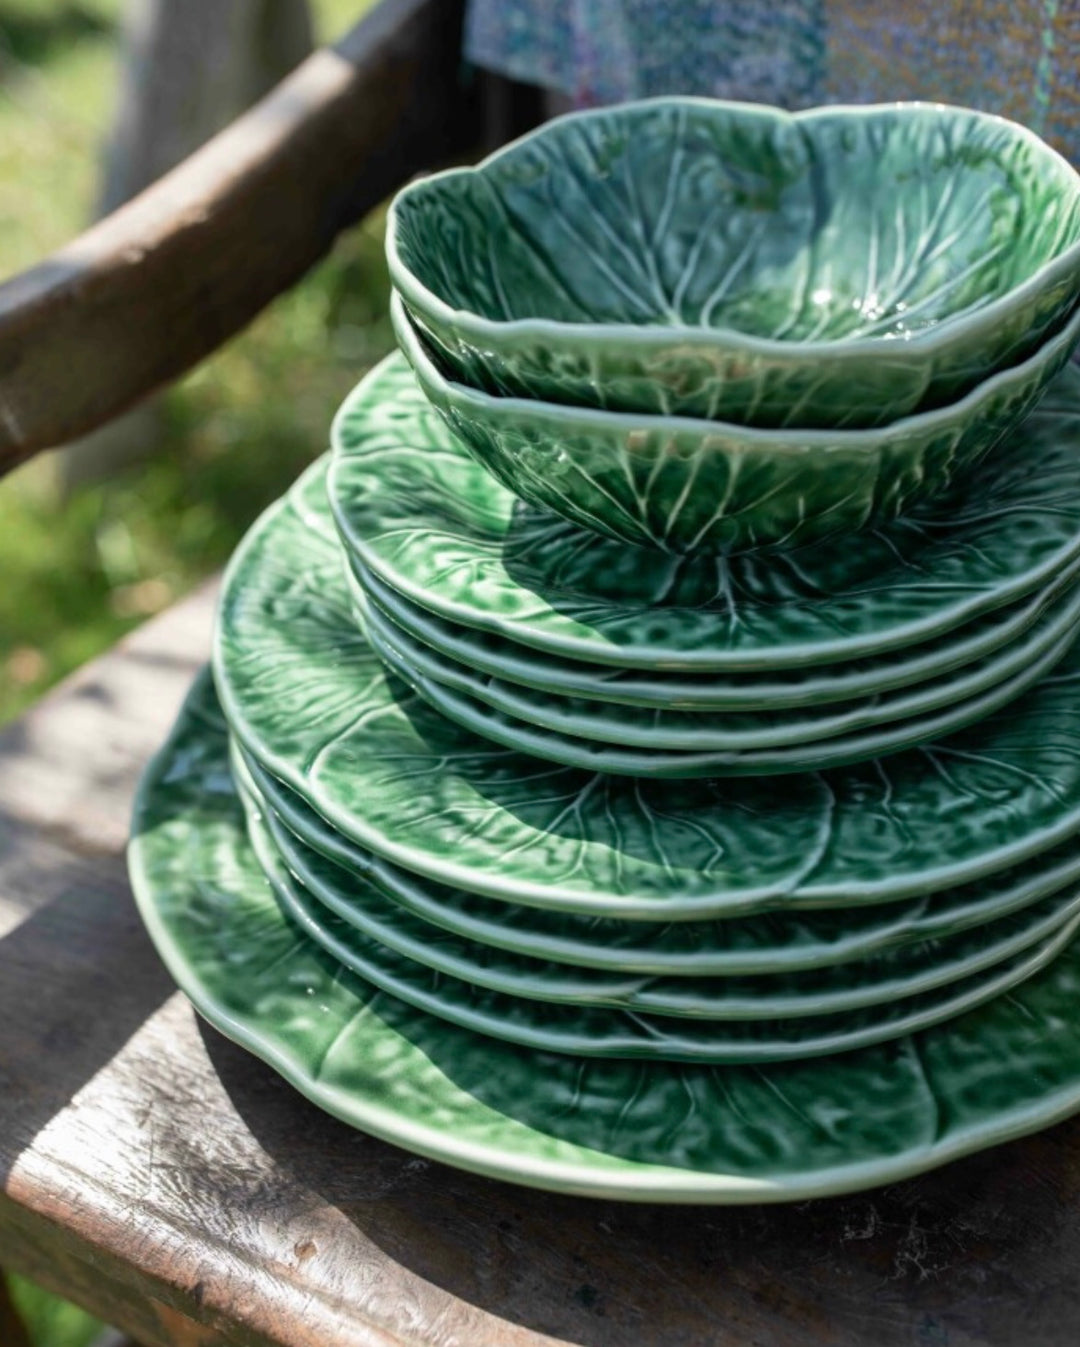 Liten tallerken bordallo Ø: 20,5 cm green